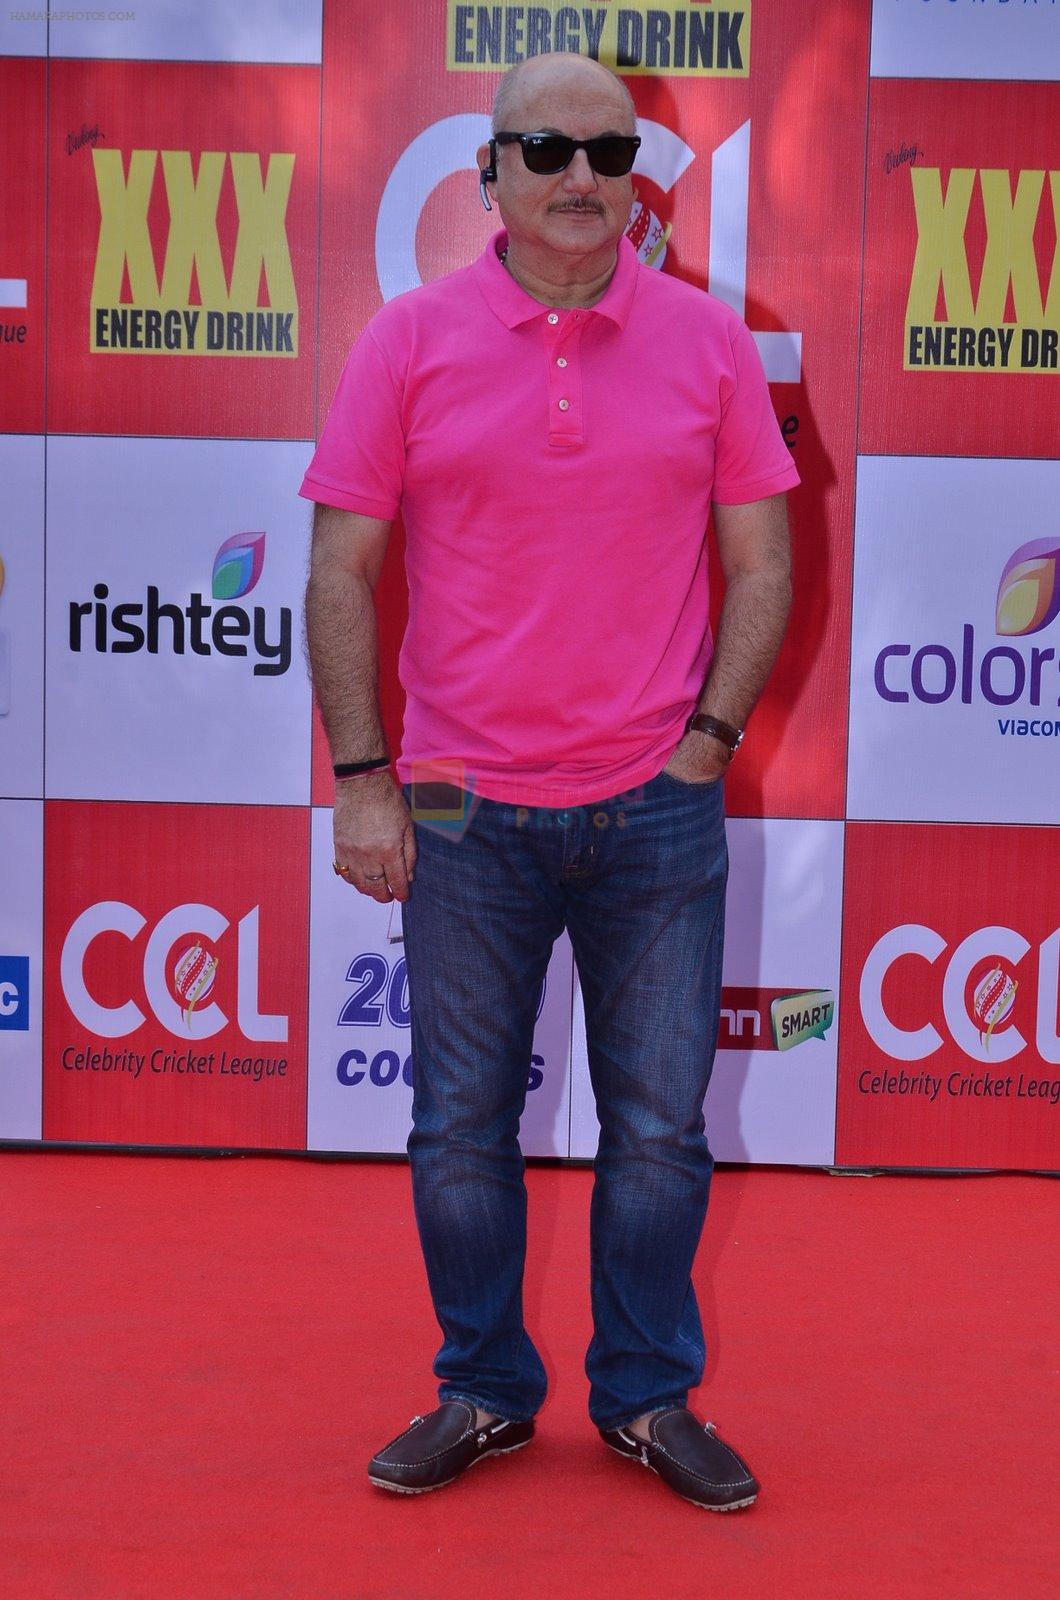 Anupam Kher at CCL Red Carpet in Broabourne, Mumbai on 10th Jan 2015